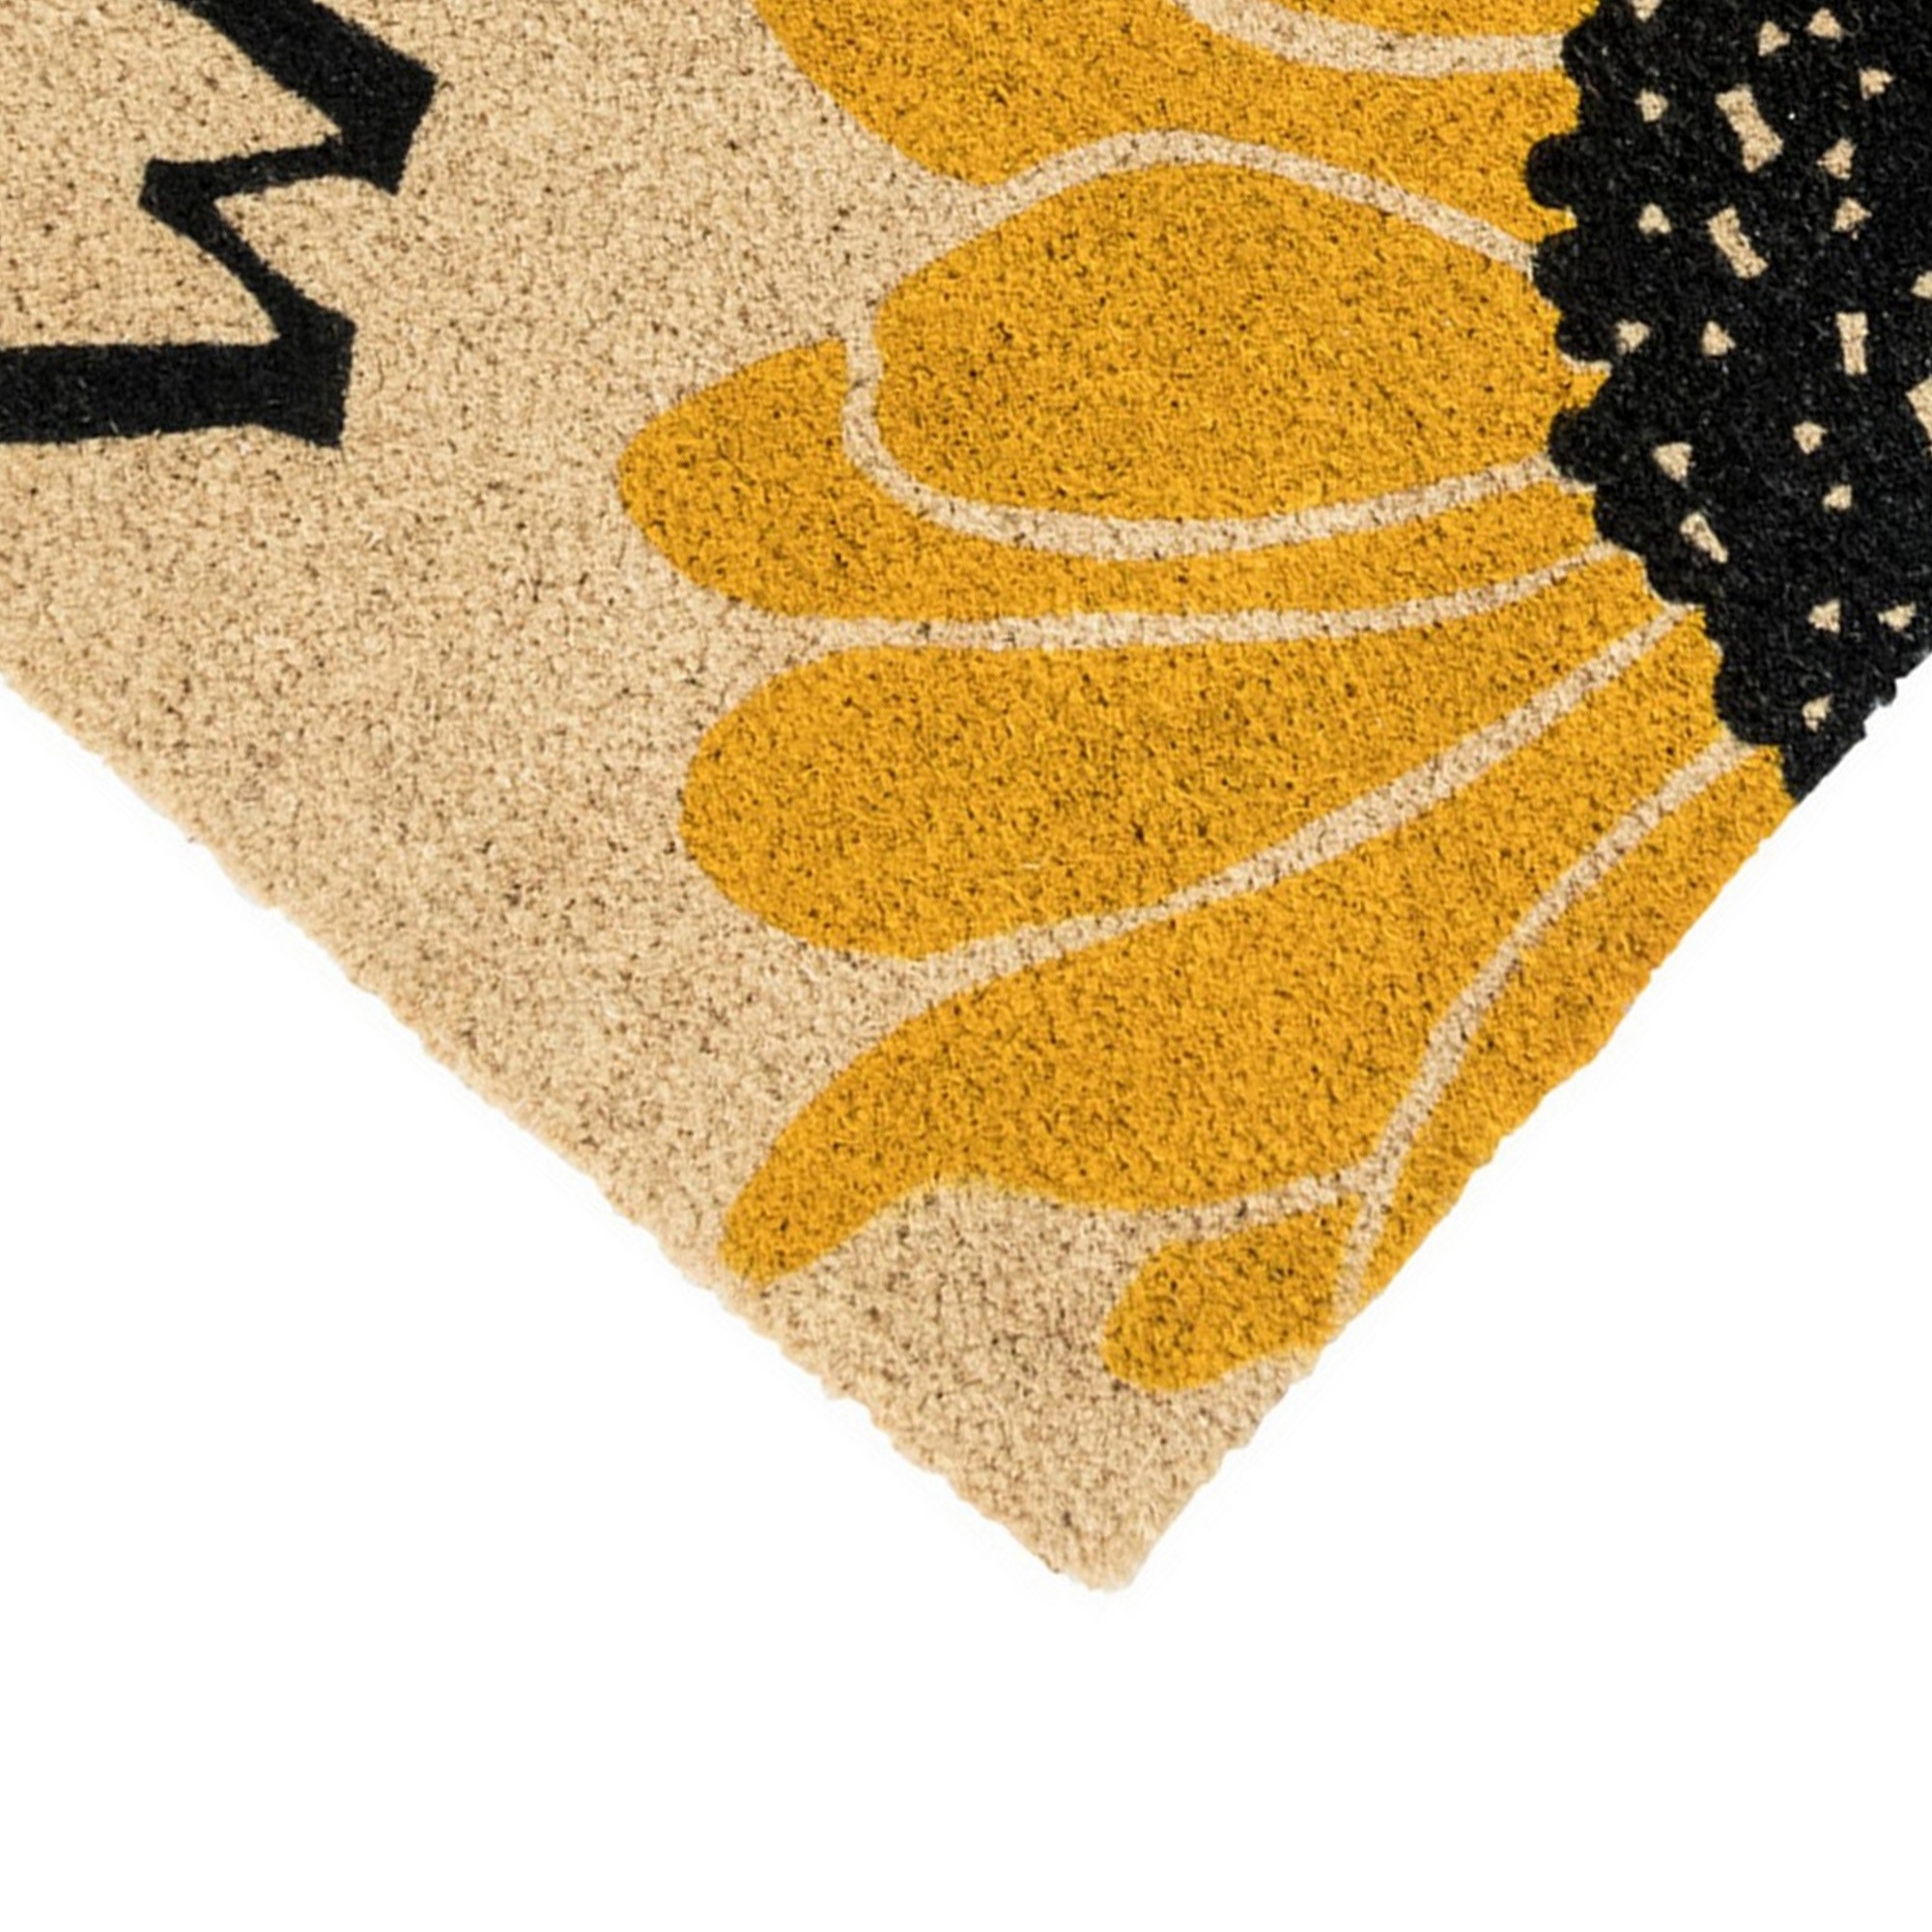 24 X 36 Coir Welcome Doormat, Black, Yellow Sunflower Print, Ivory Base- Saltoro Sherpi